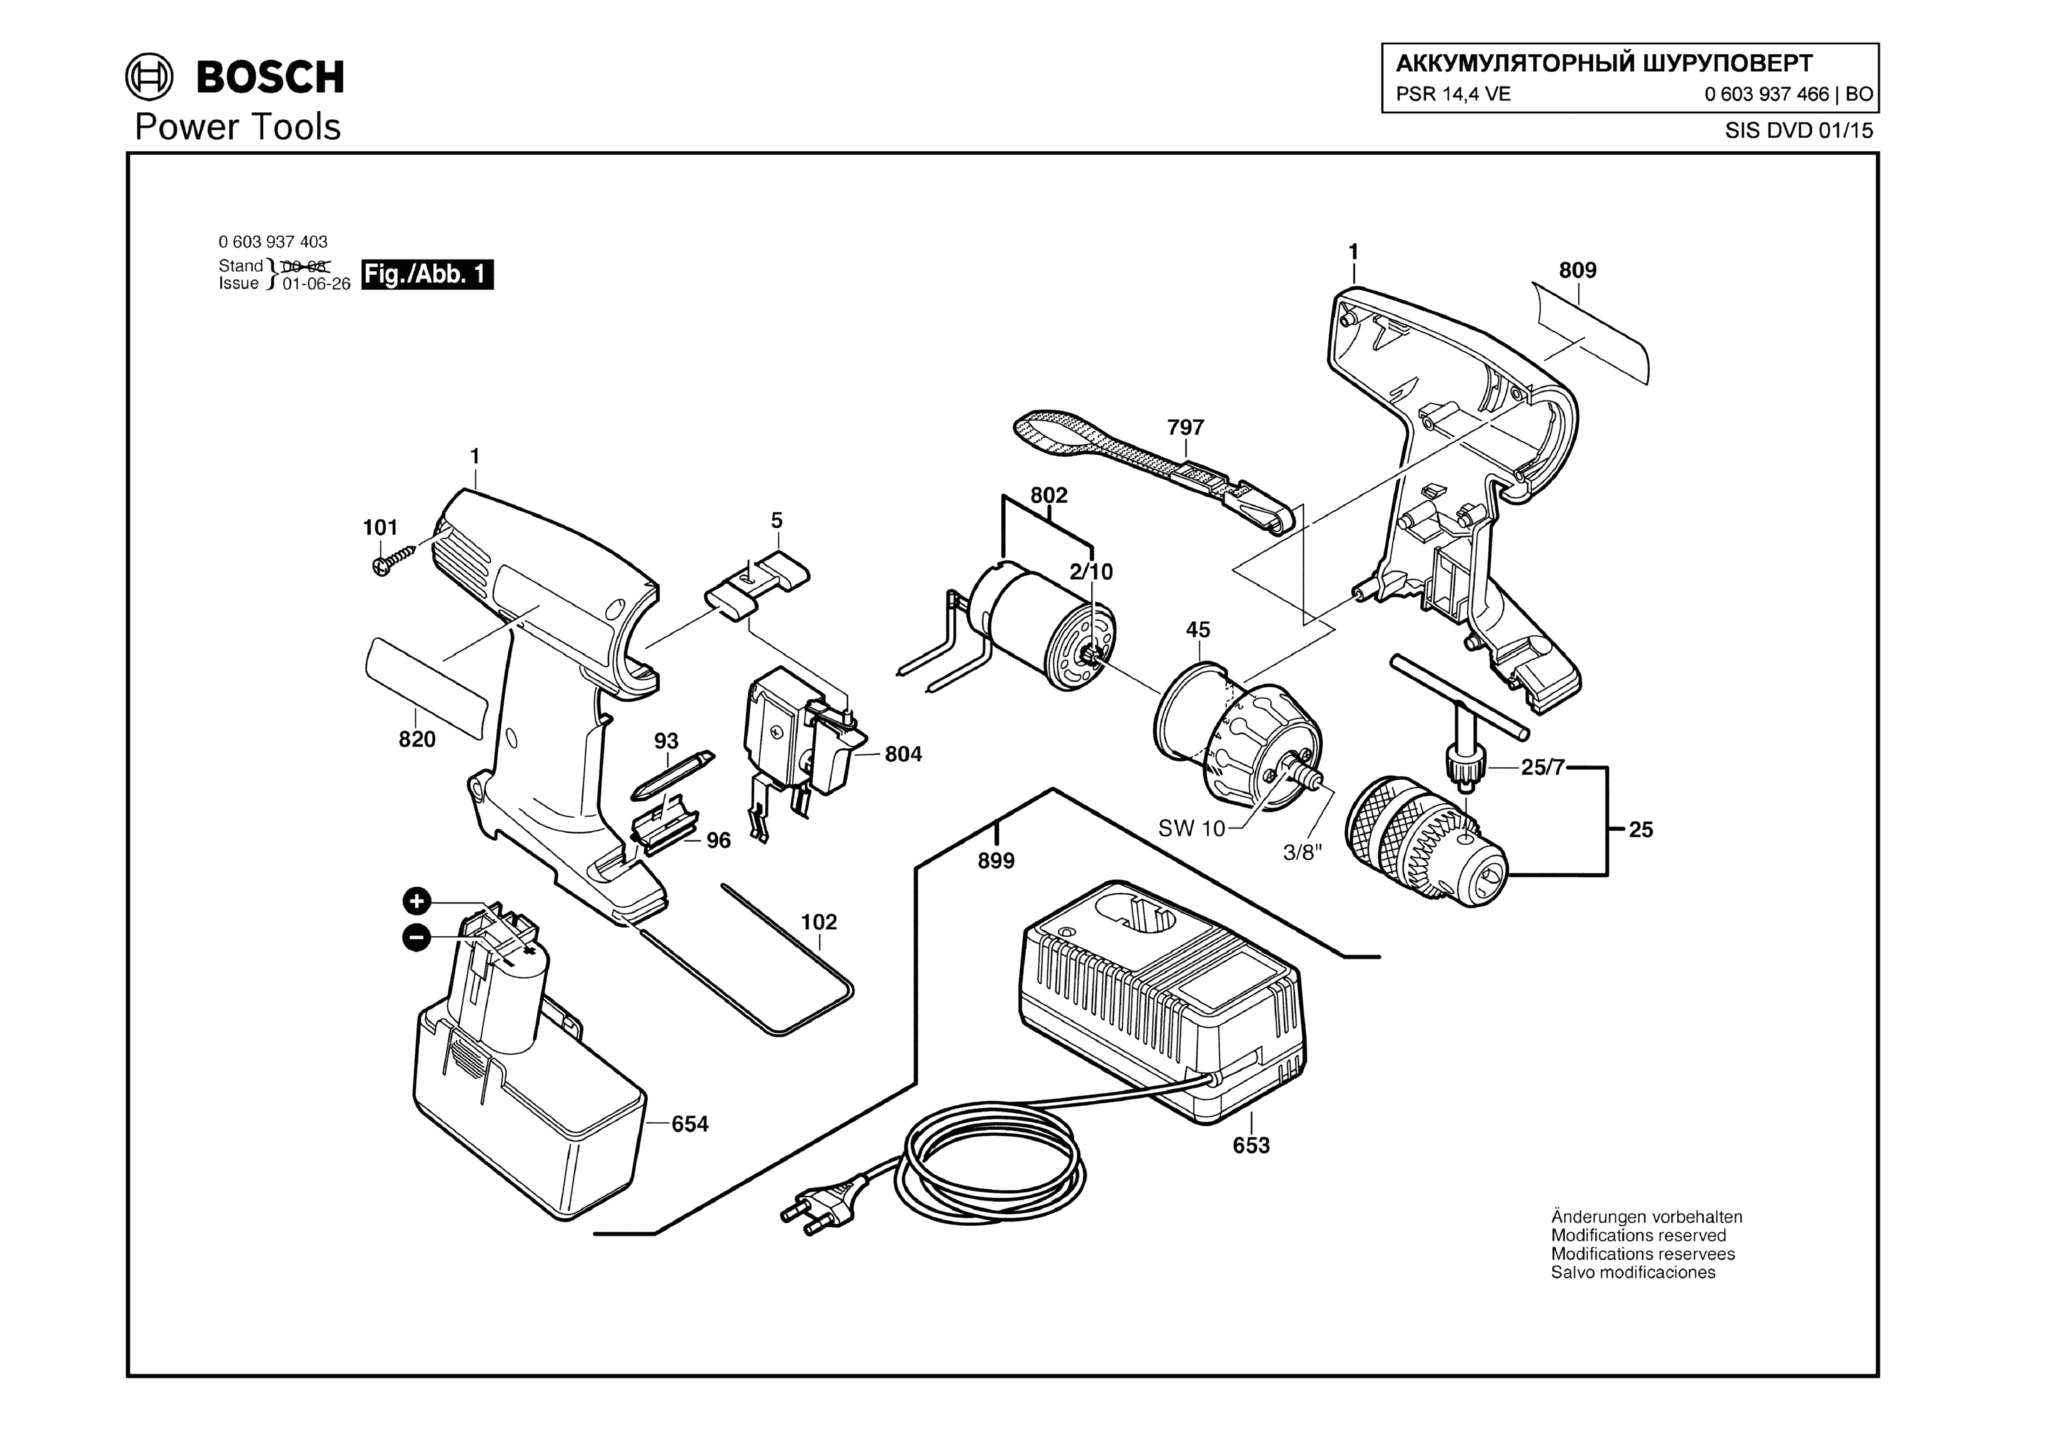 Запчасти, схема и деталировка Bosch PSR 14,4 VE (ТИП 0603937466)